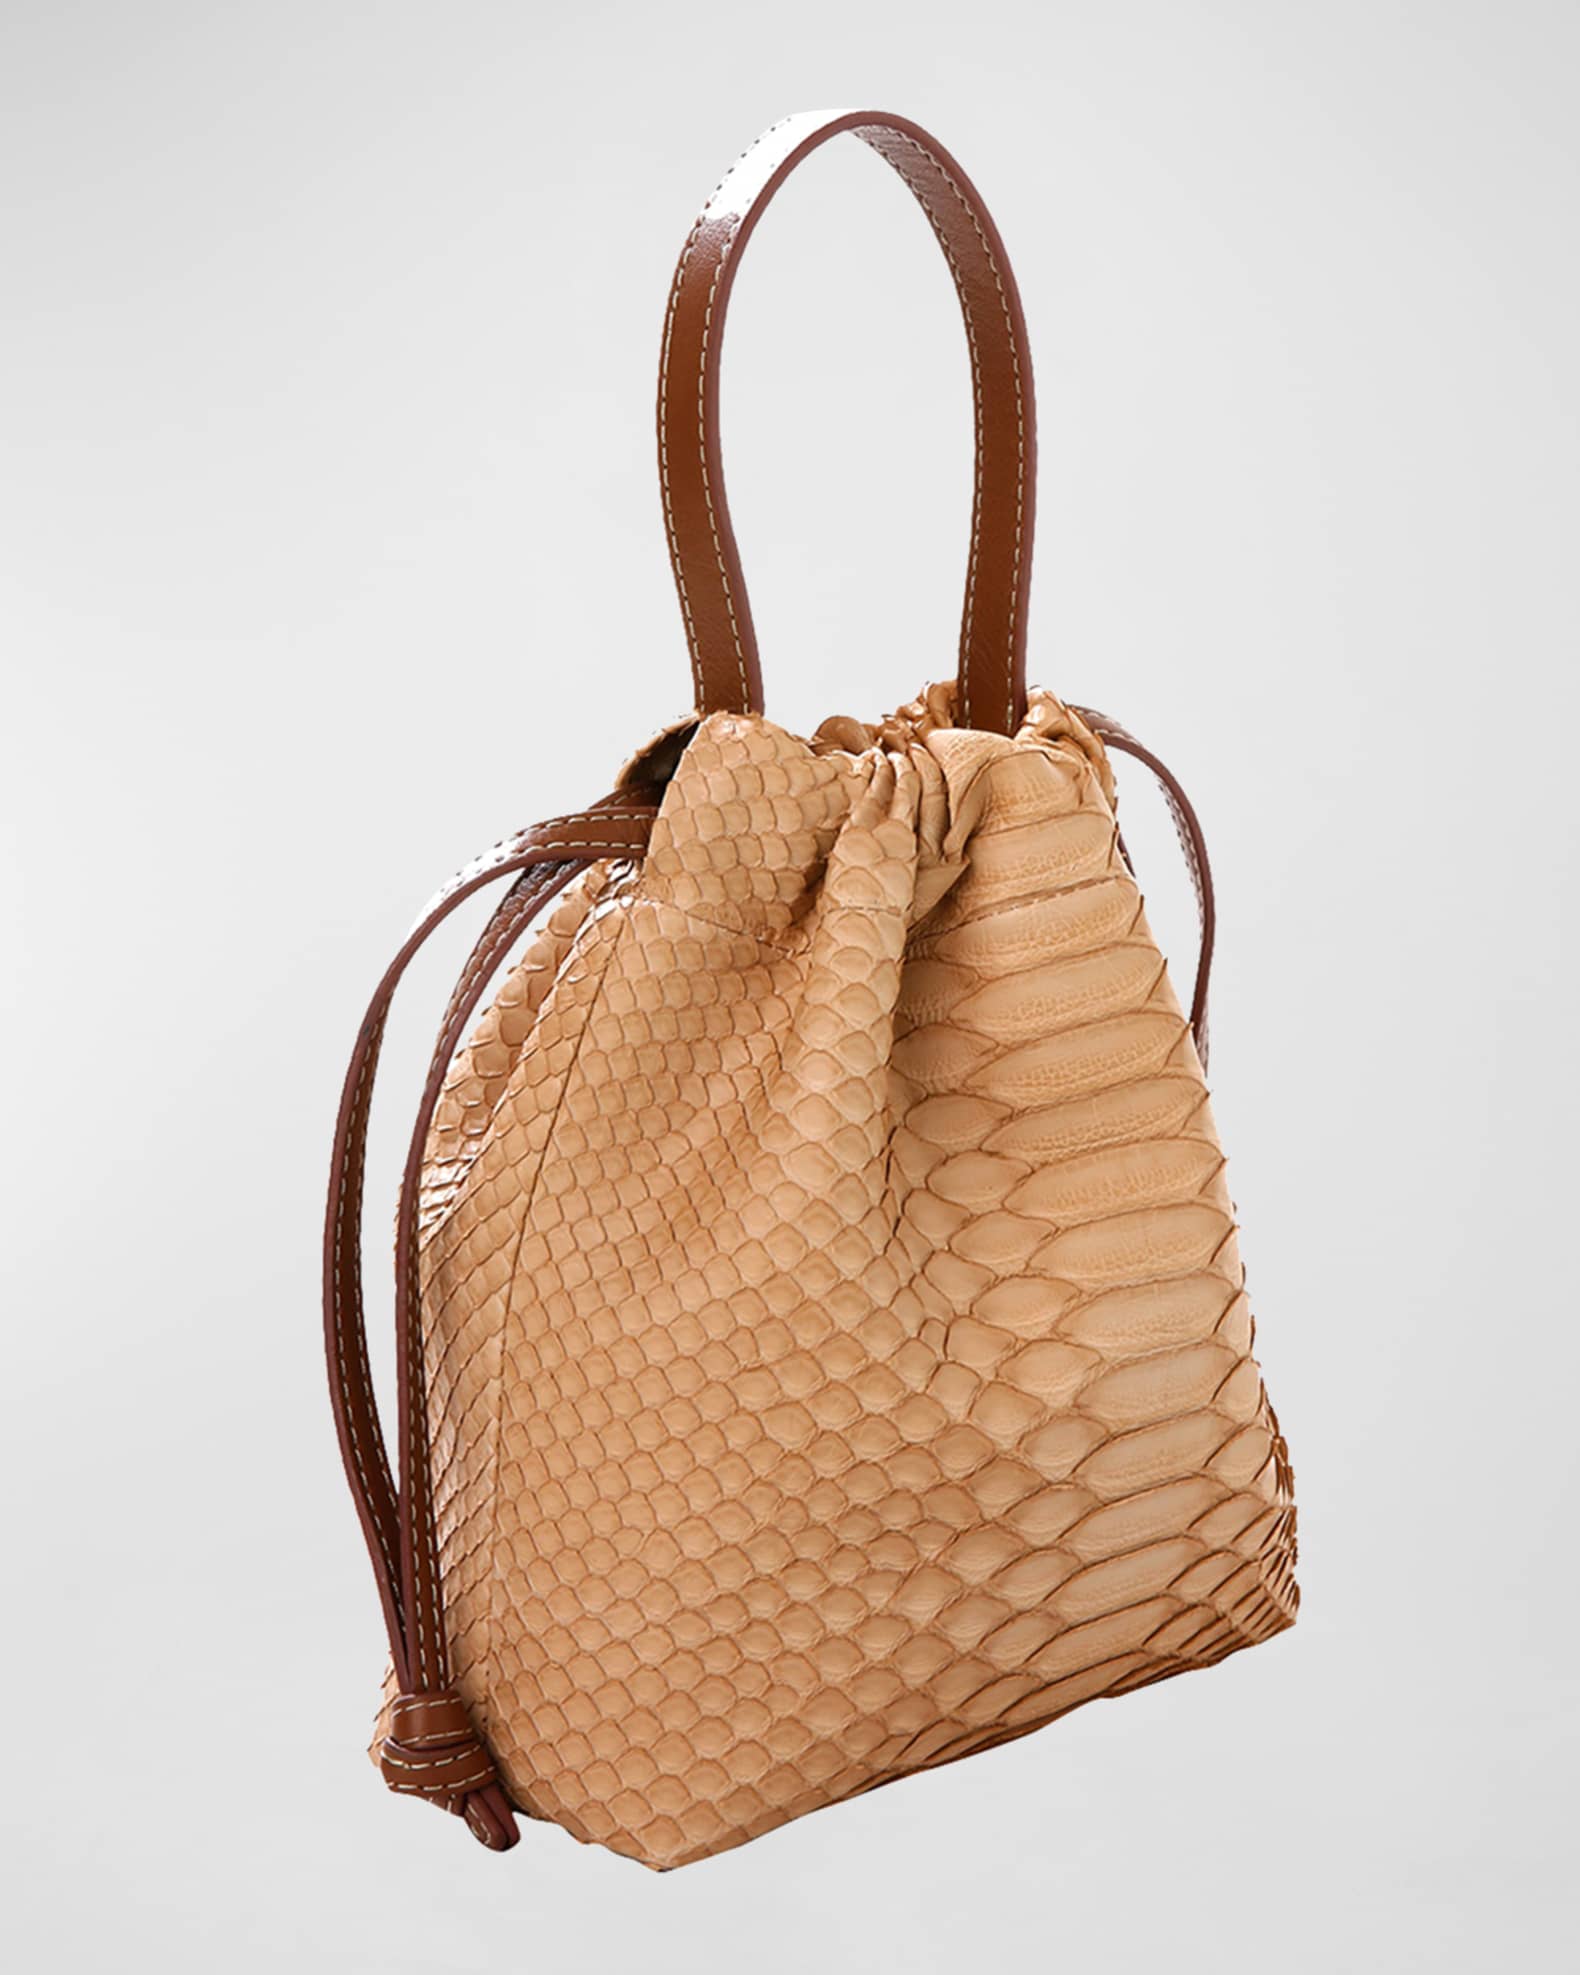 Louis Vuitton Wish Bag Monogram Suede with Python